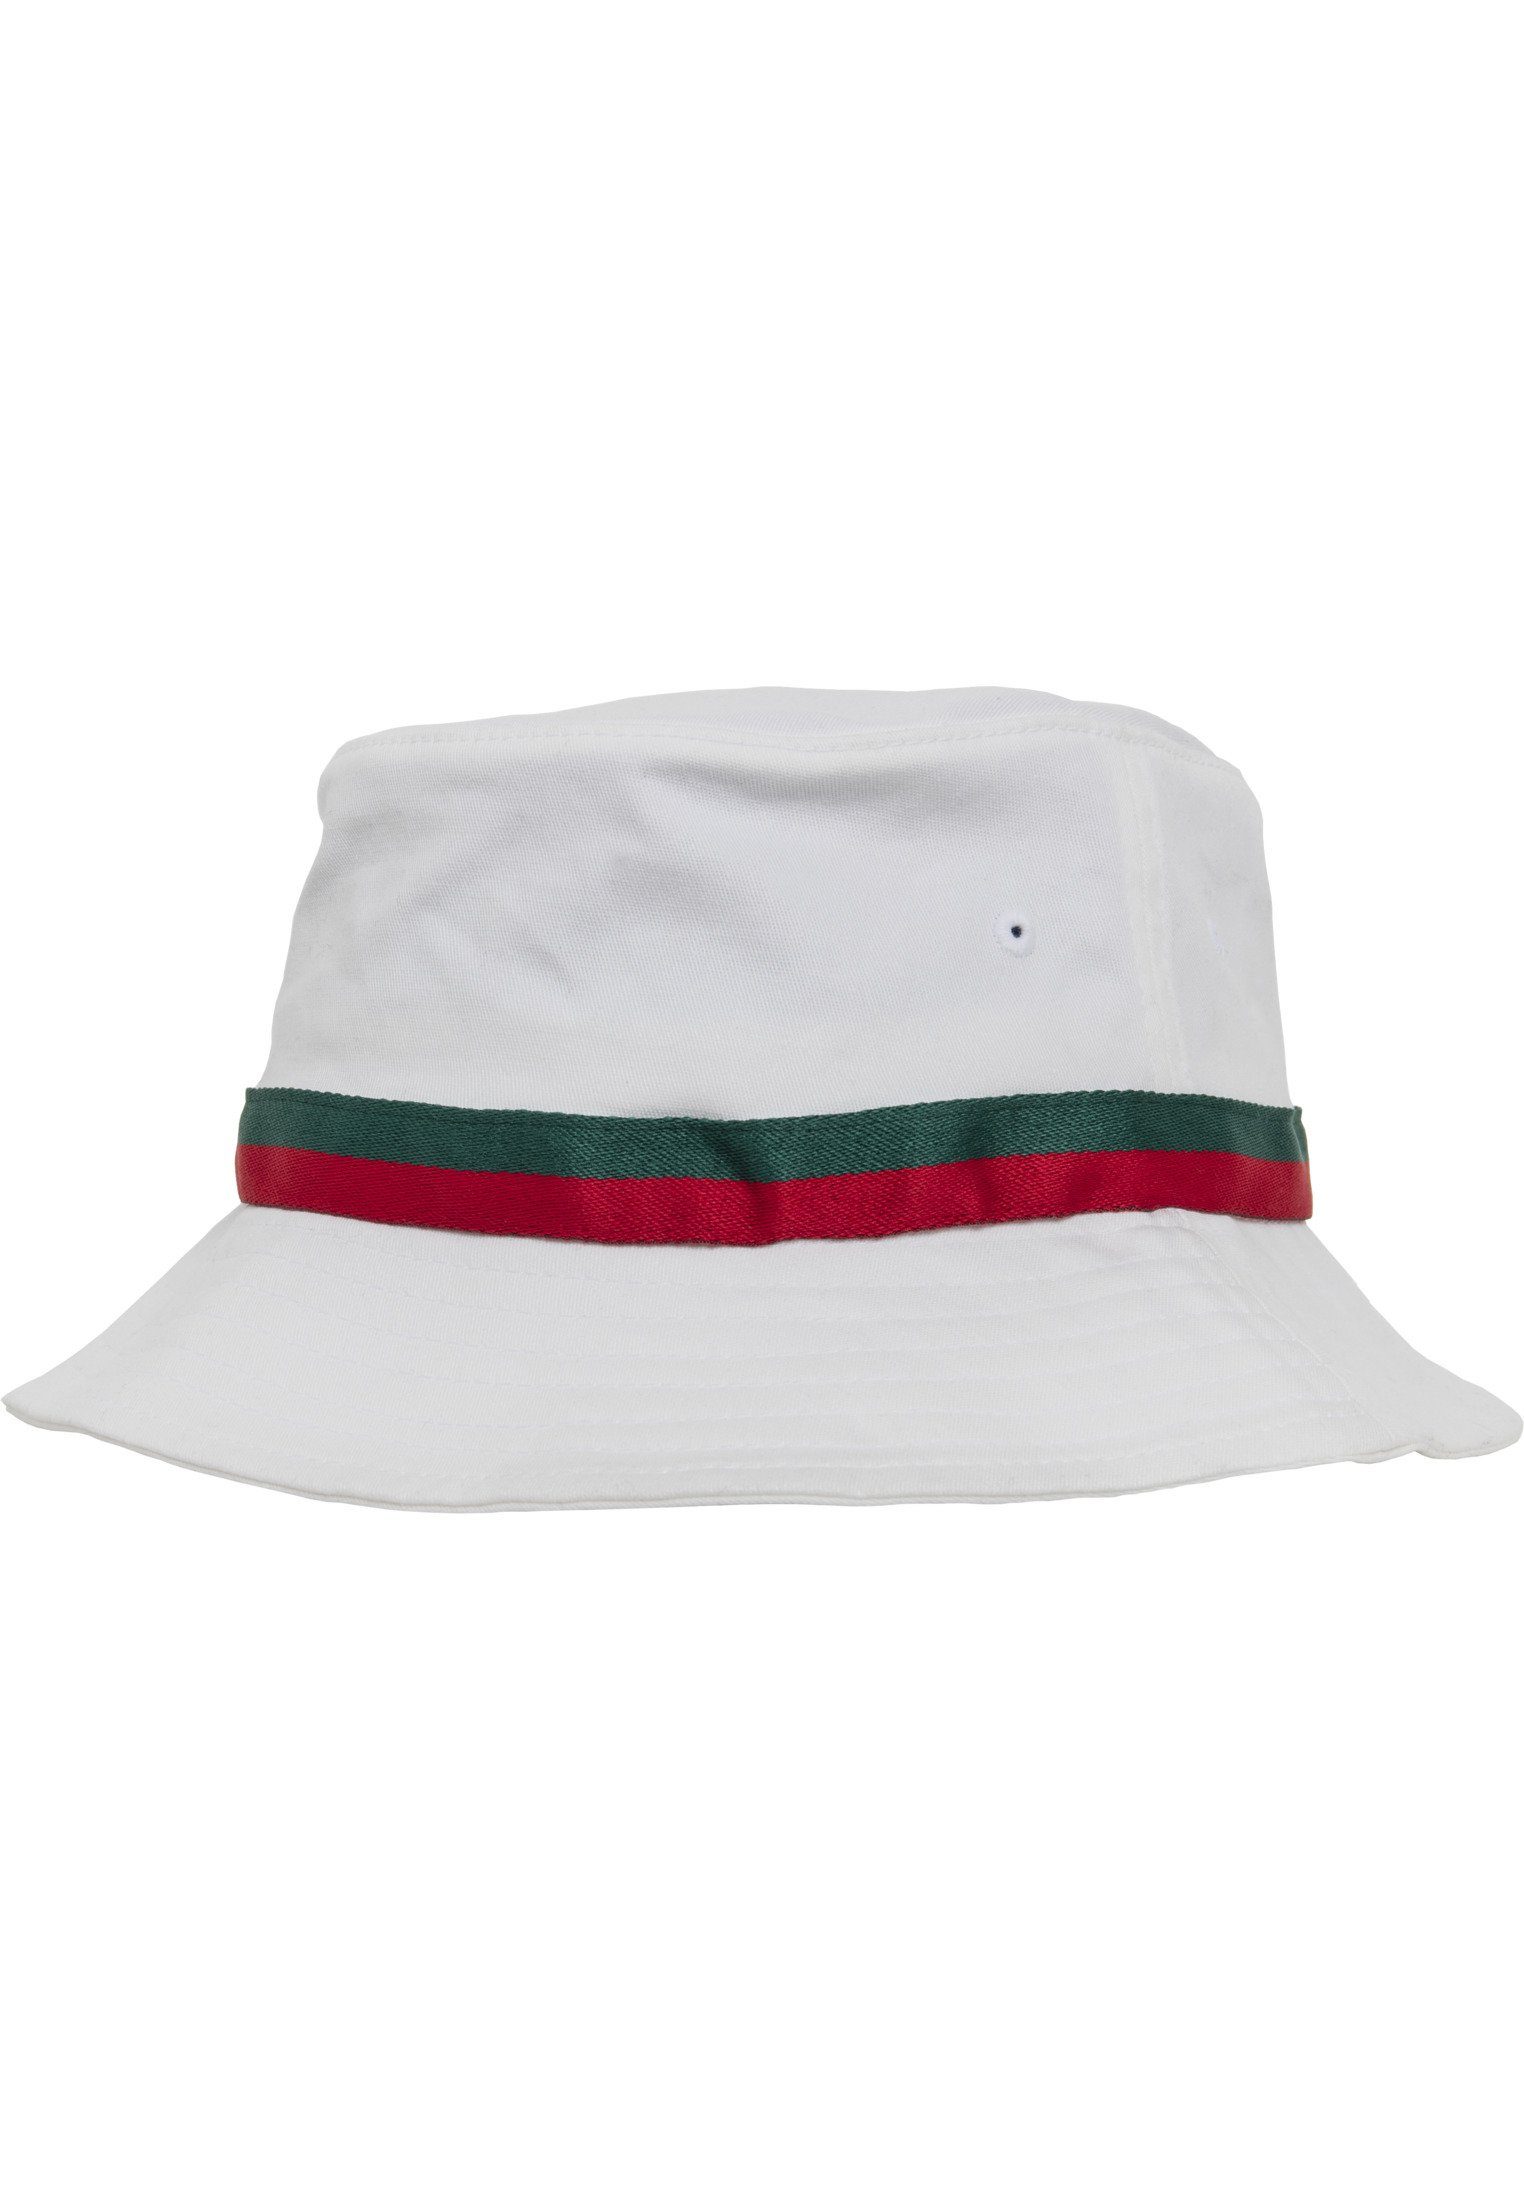 Flexfit Flex Cap Bucket white/firered/green Hat Stripe Hat Bucket